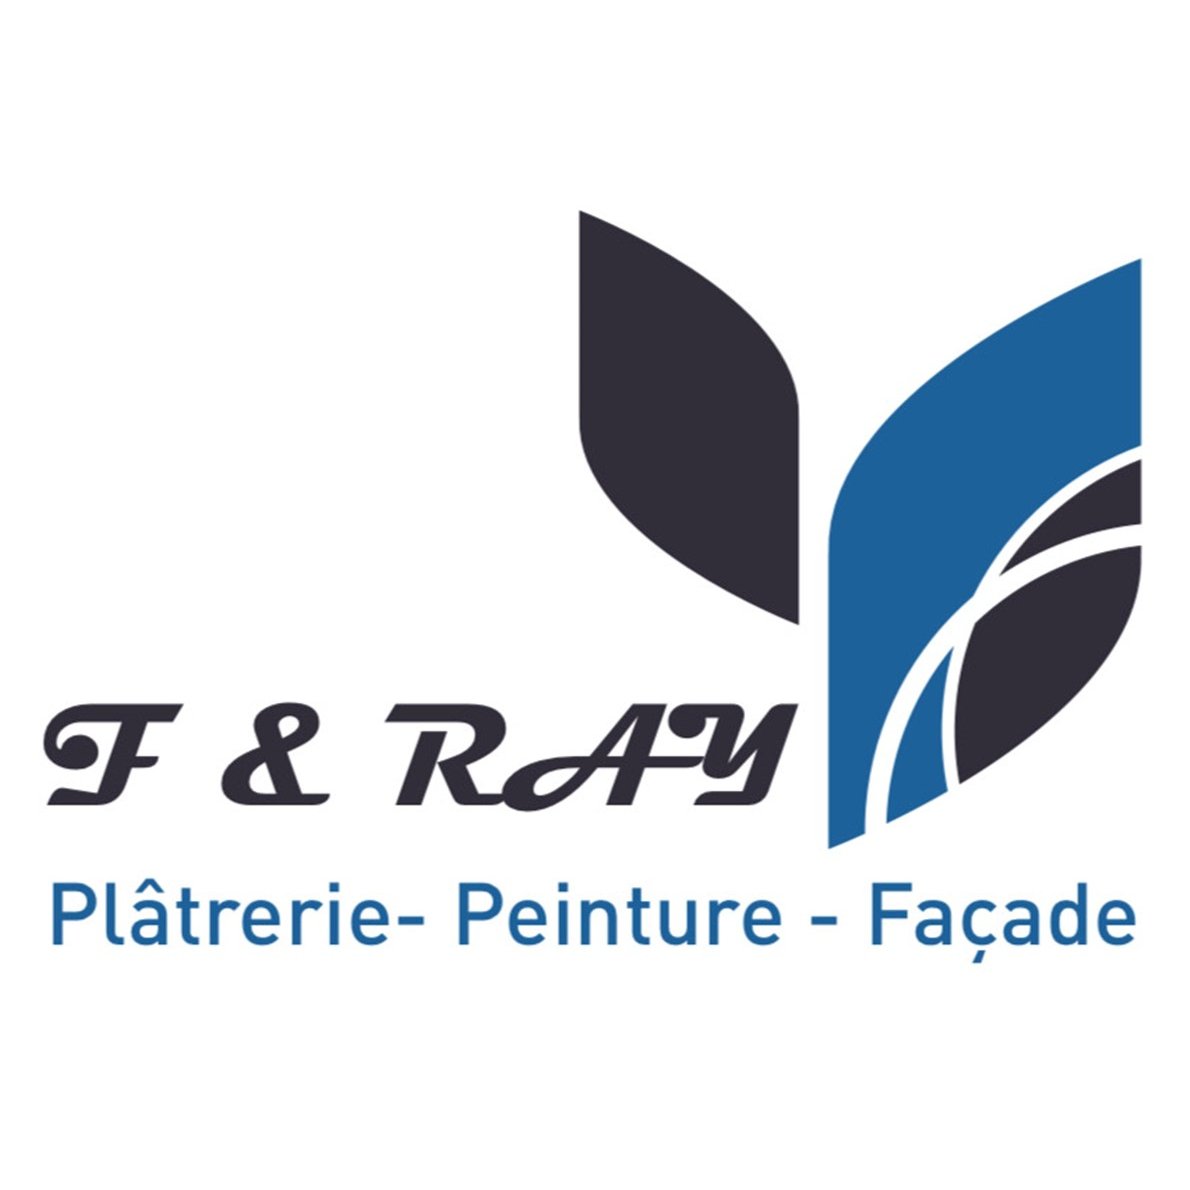 F & RAY SARL Logo